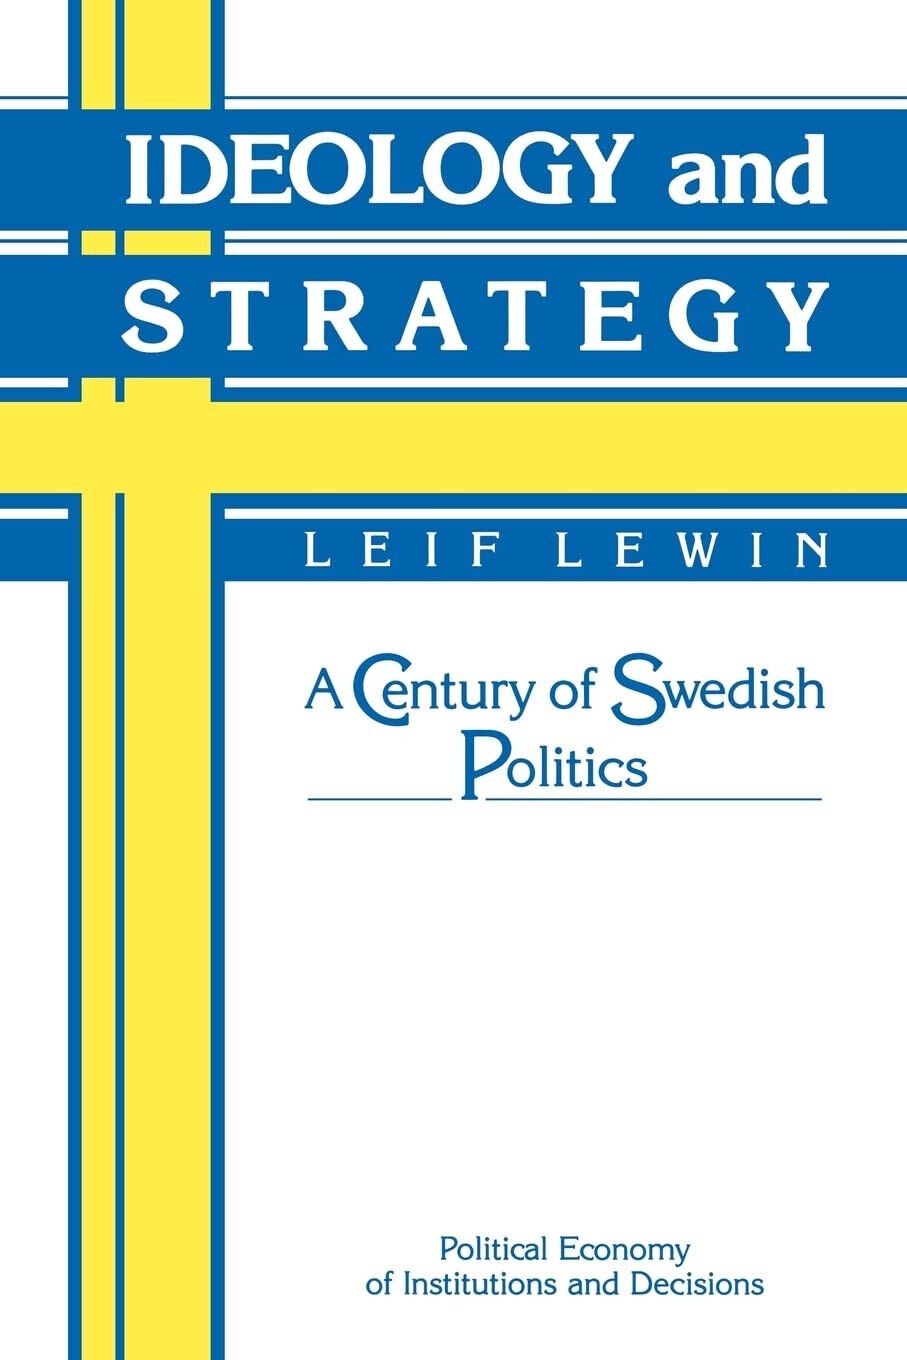 Ideology and Strategy - Lewin - Cambridge, 2008 libro usato